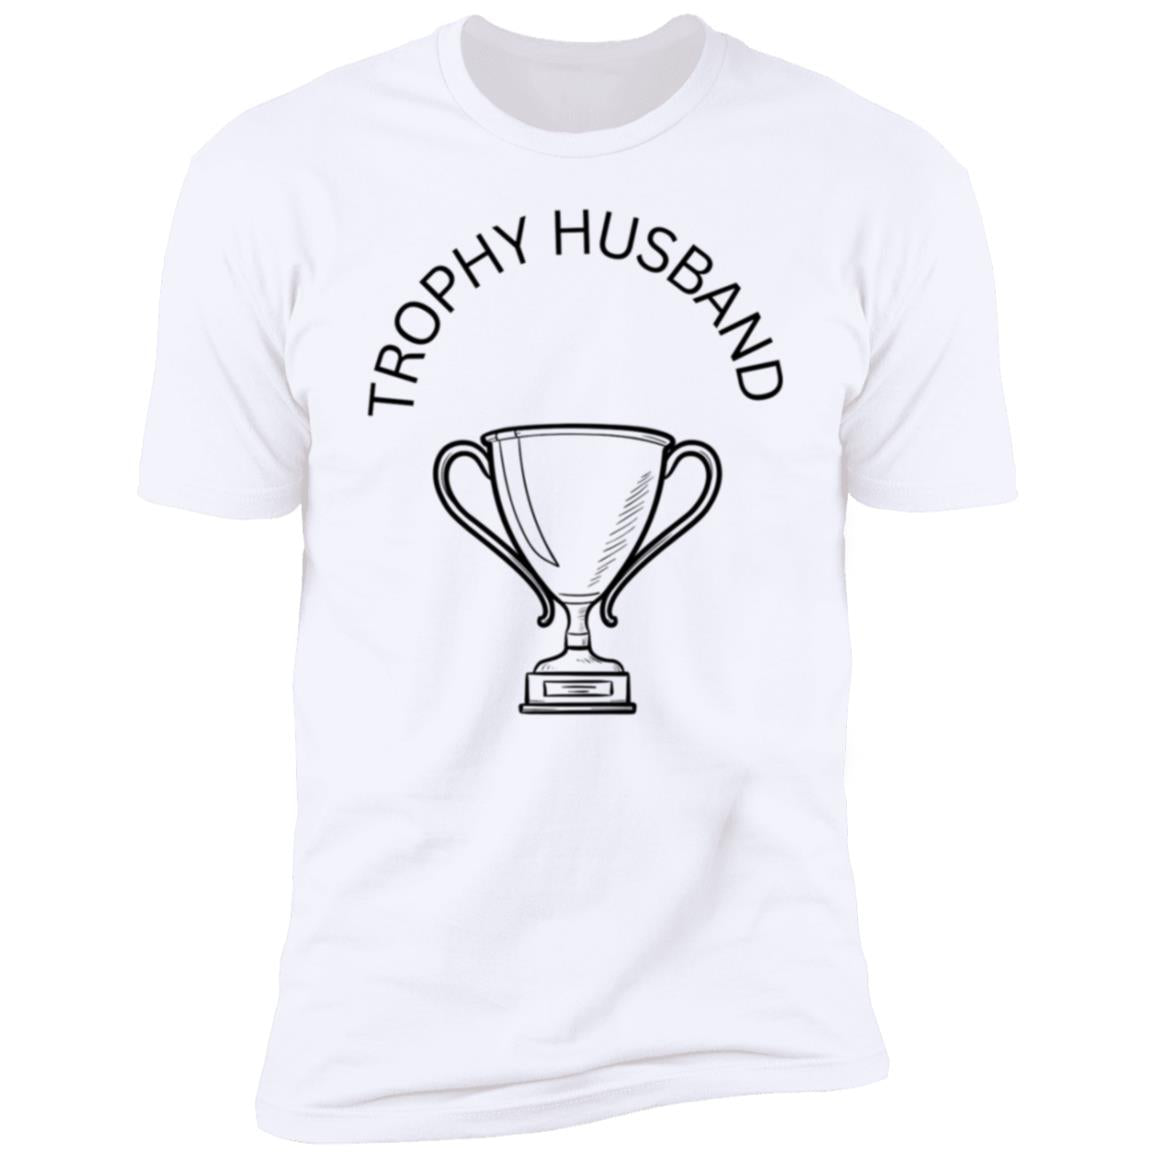 Trophy Husband  T-Shirt Roo$ter Brand